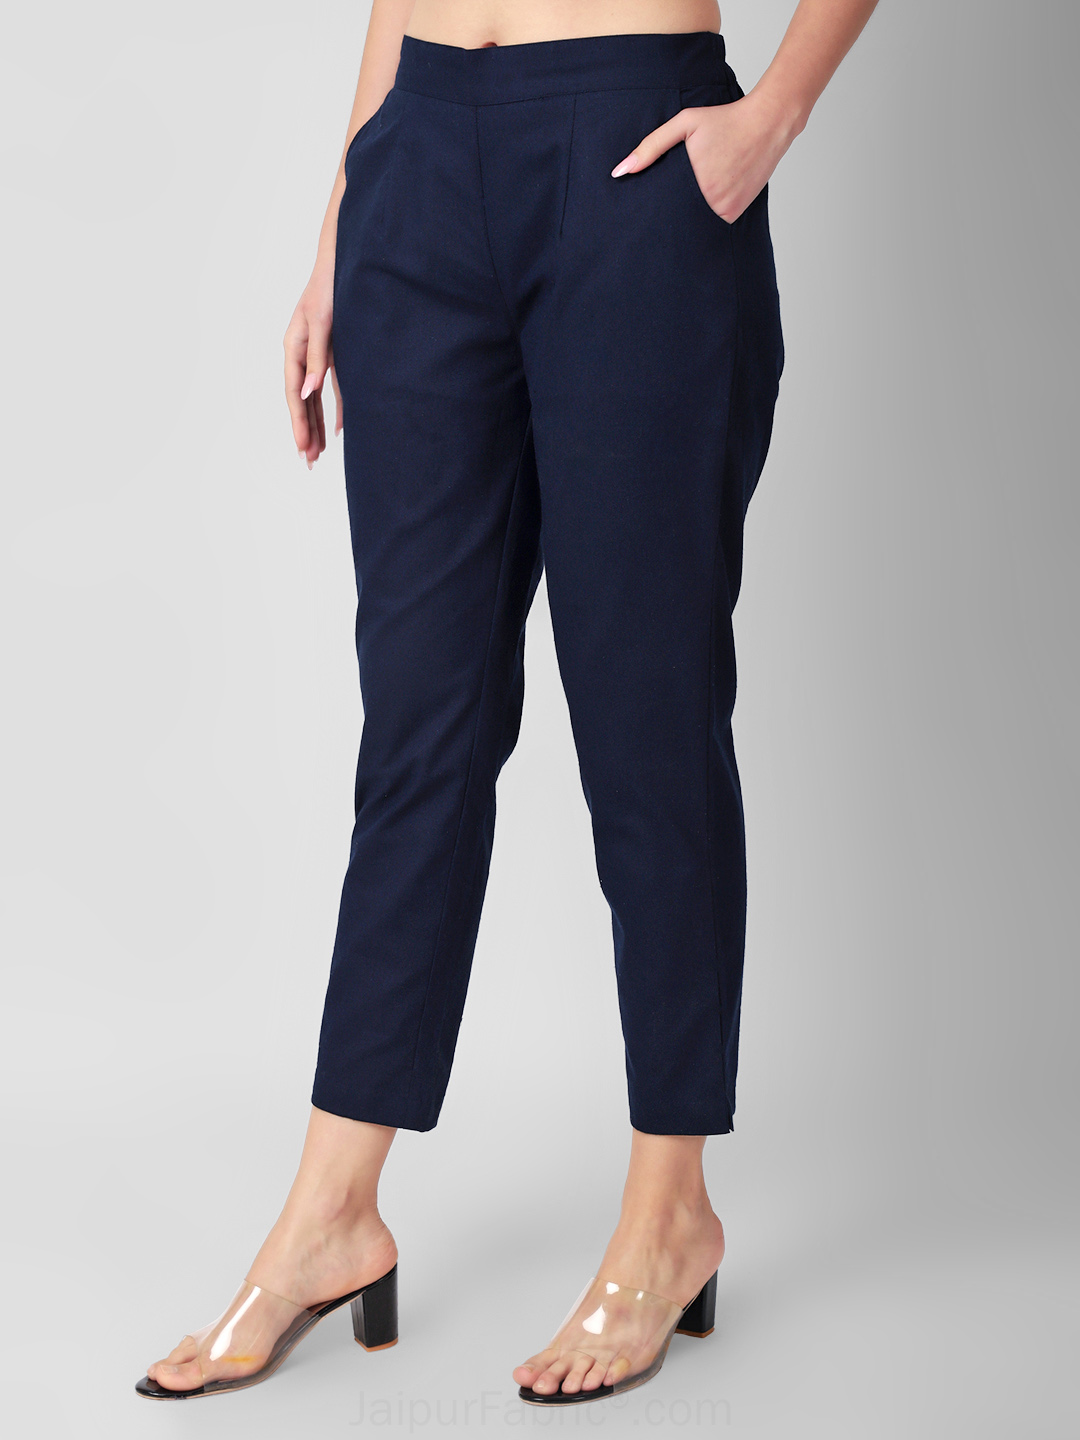 Cotton Pants & Shorts For Women | Lafayette 148 New York